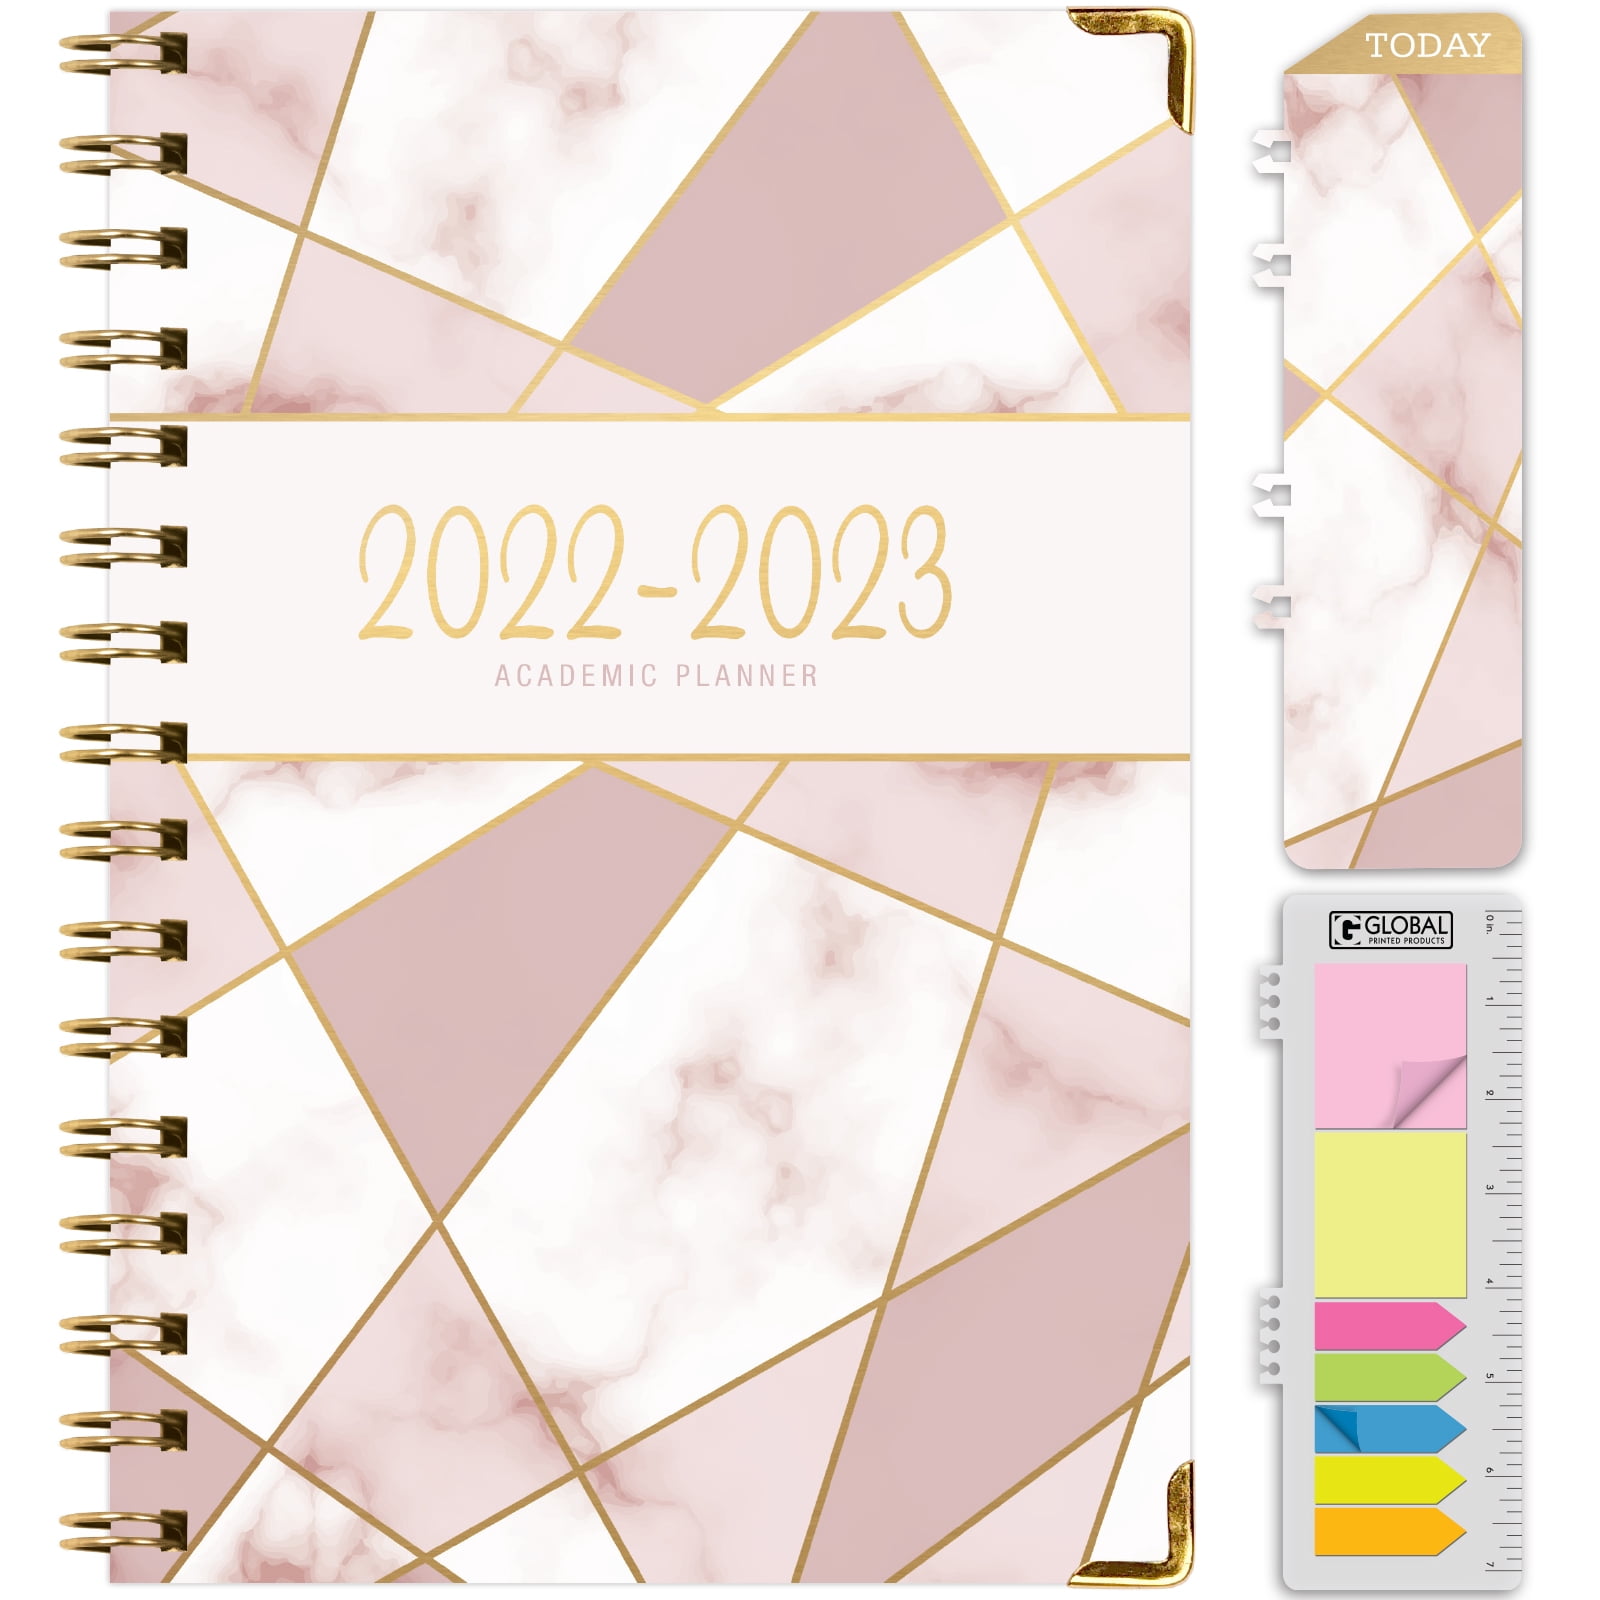 2019-2023 Five Year Planner 60 Monthly Calendar Appointment Agenda Organizer Book Planner Pocket Size Mosaic Design 